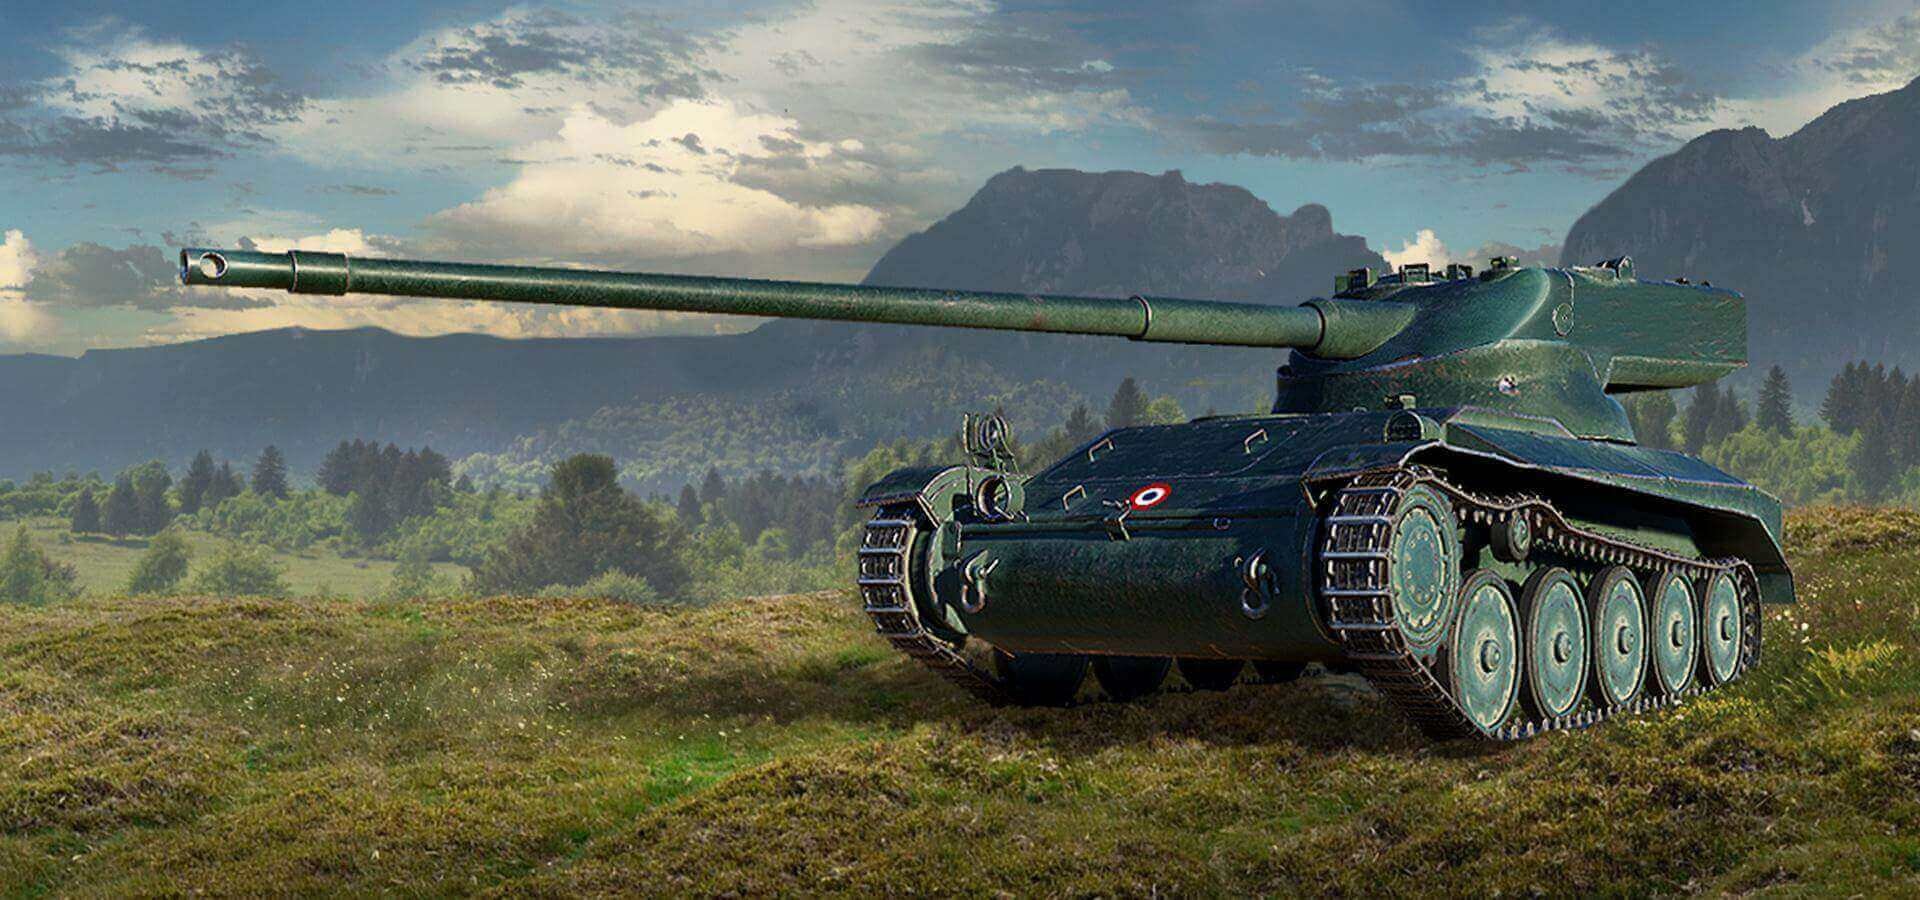 Tanks 13. AMX 13 57. AMX 13 57 gf. АМХ 1357. World of Tanks AMX 13 57.